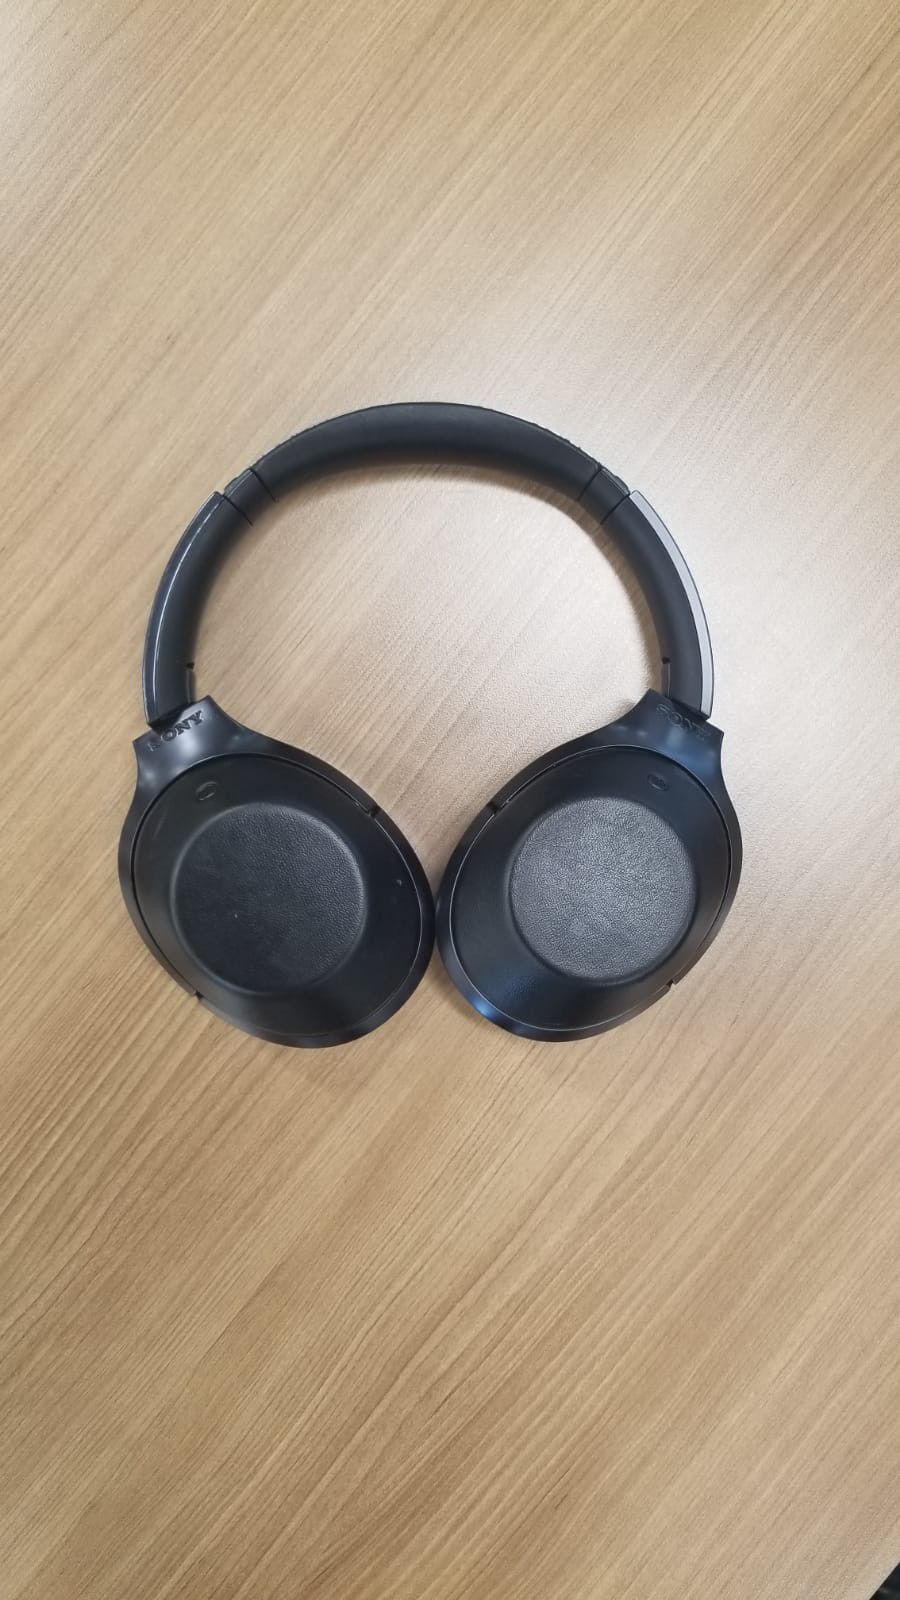 Sony WH-1000XM2 Noise Cancelling Headphones